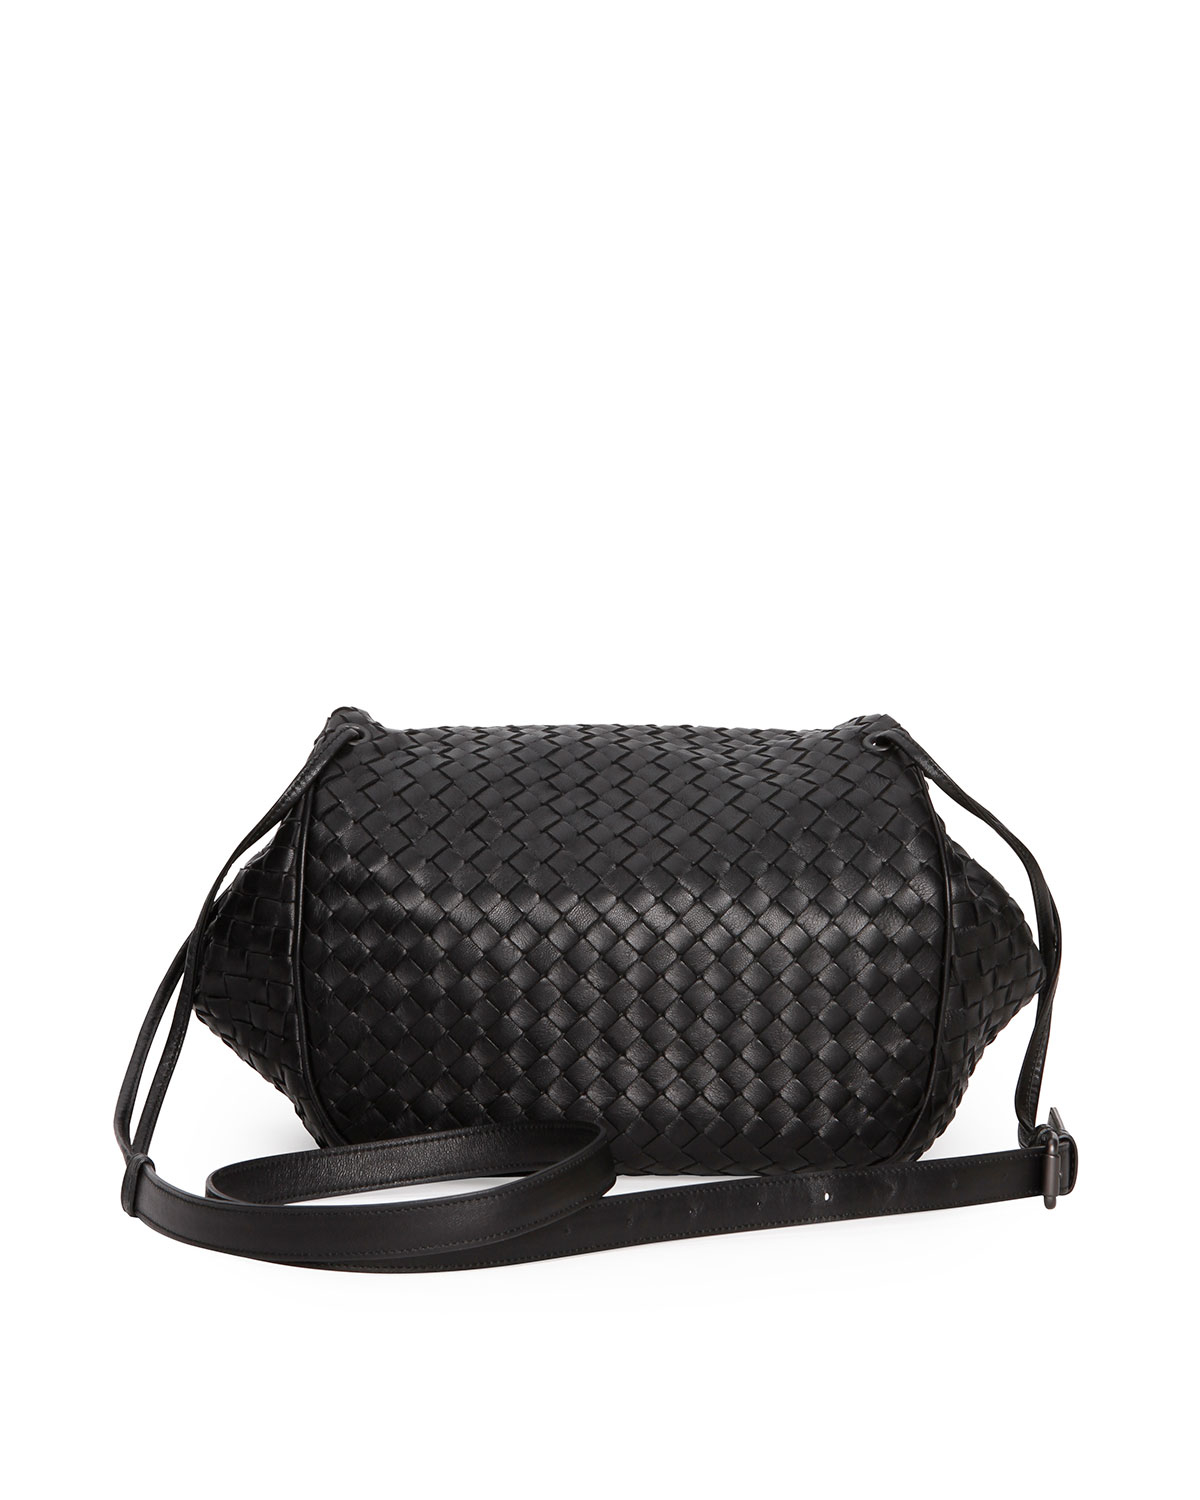 Bottega veneta Intrecciato Small Flap Messenger Bag in Black | Lyst